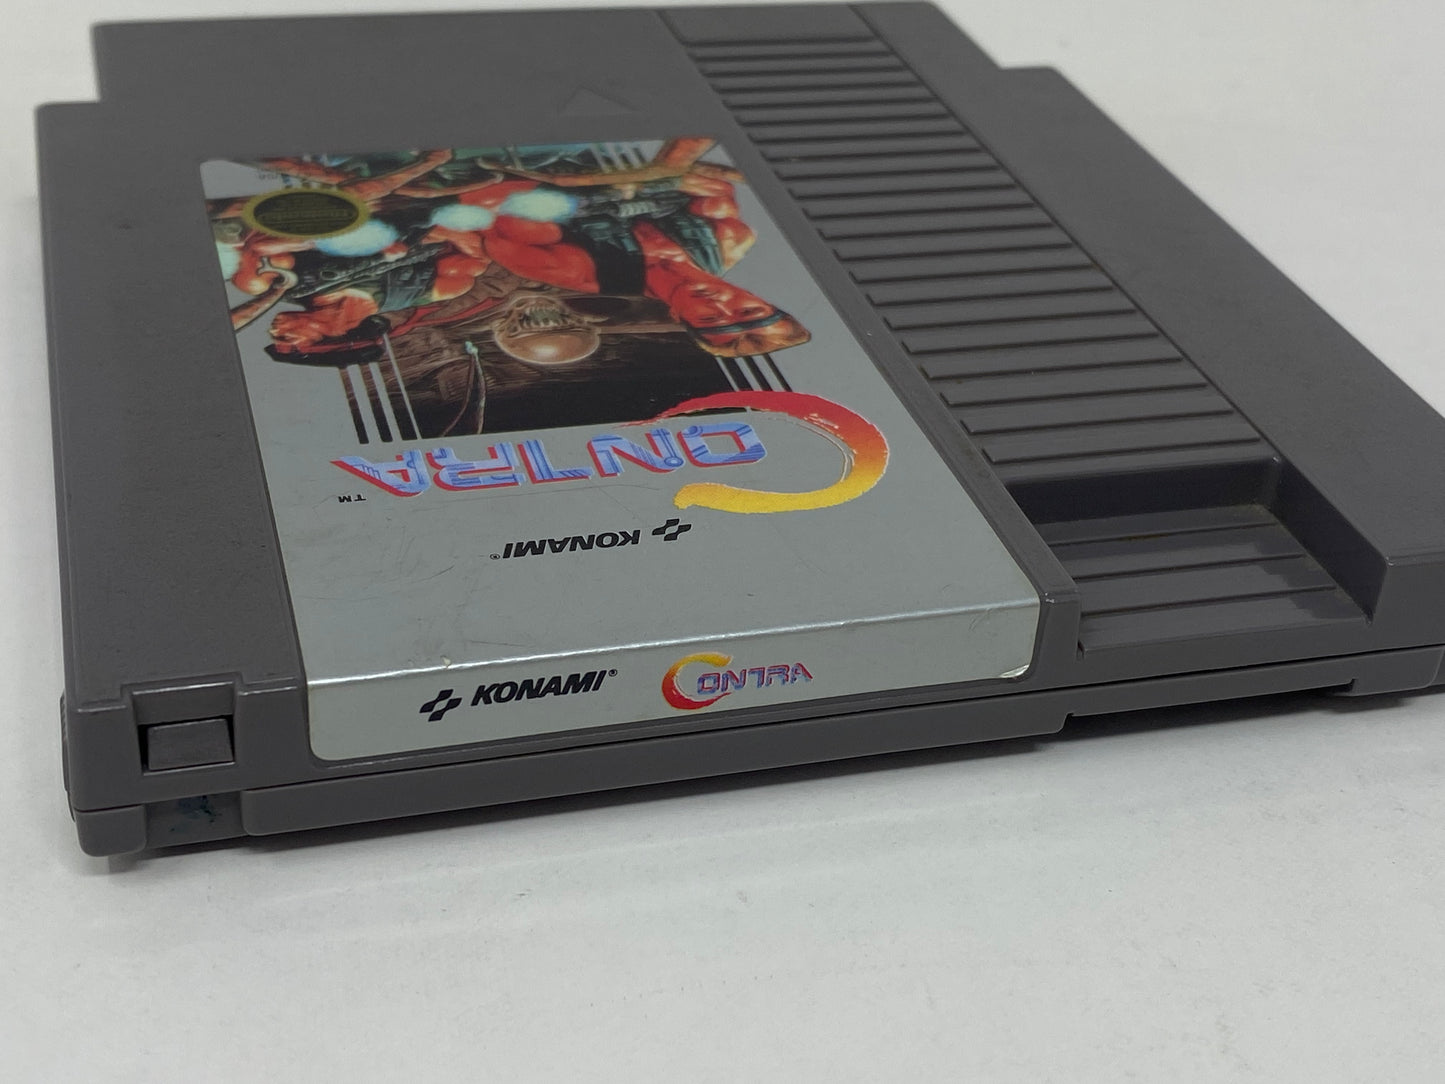 NES Nintendo - Contra - Complete in Box